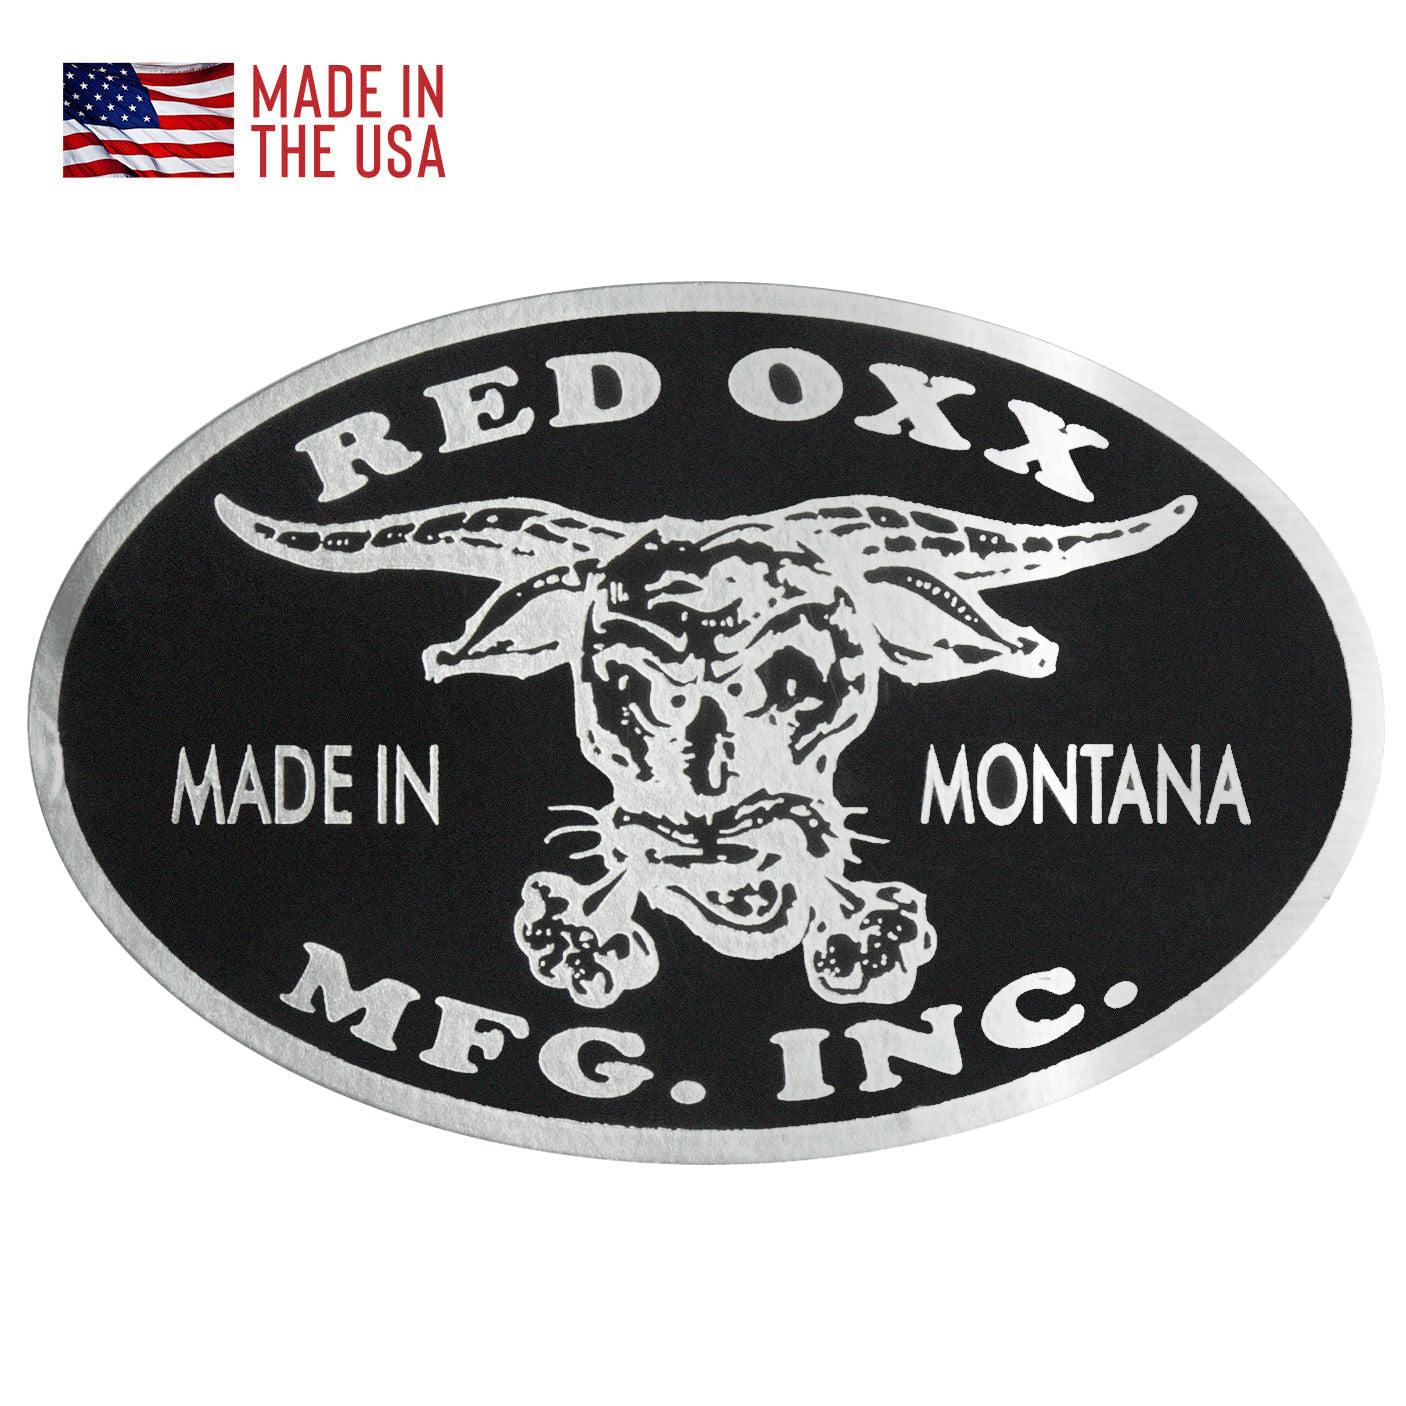 Mylar bumper sticker with silver Red Oxx logo. 